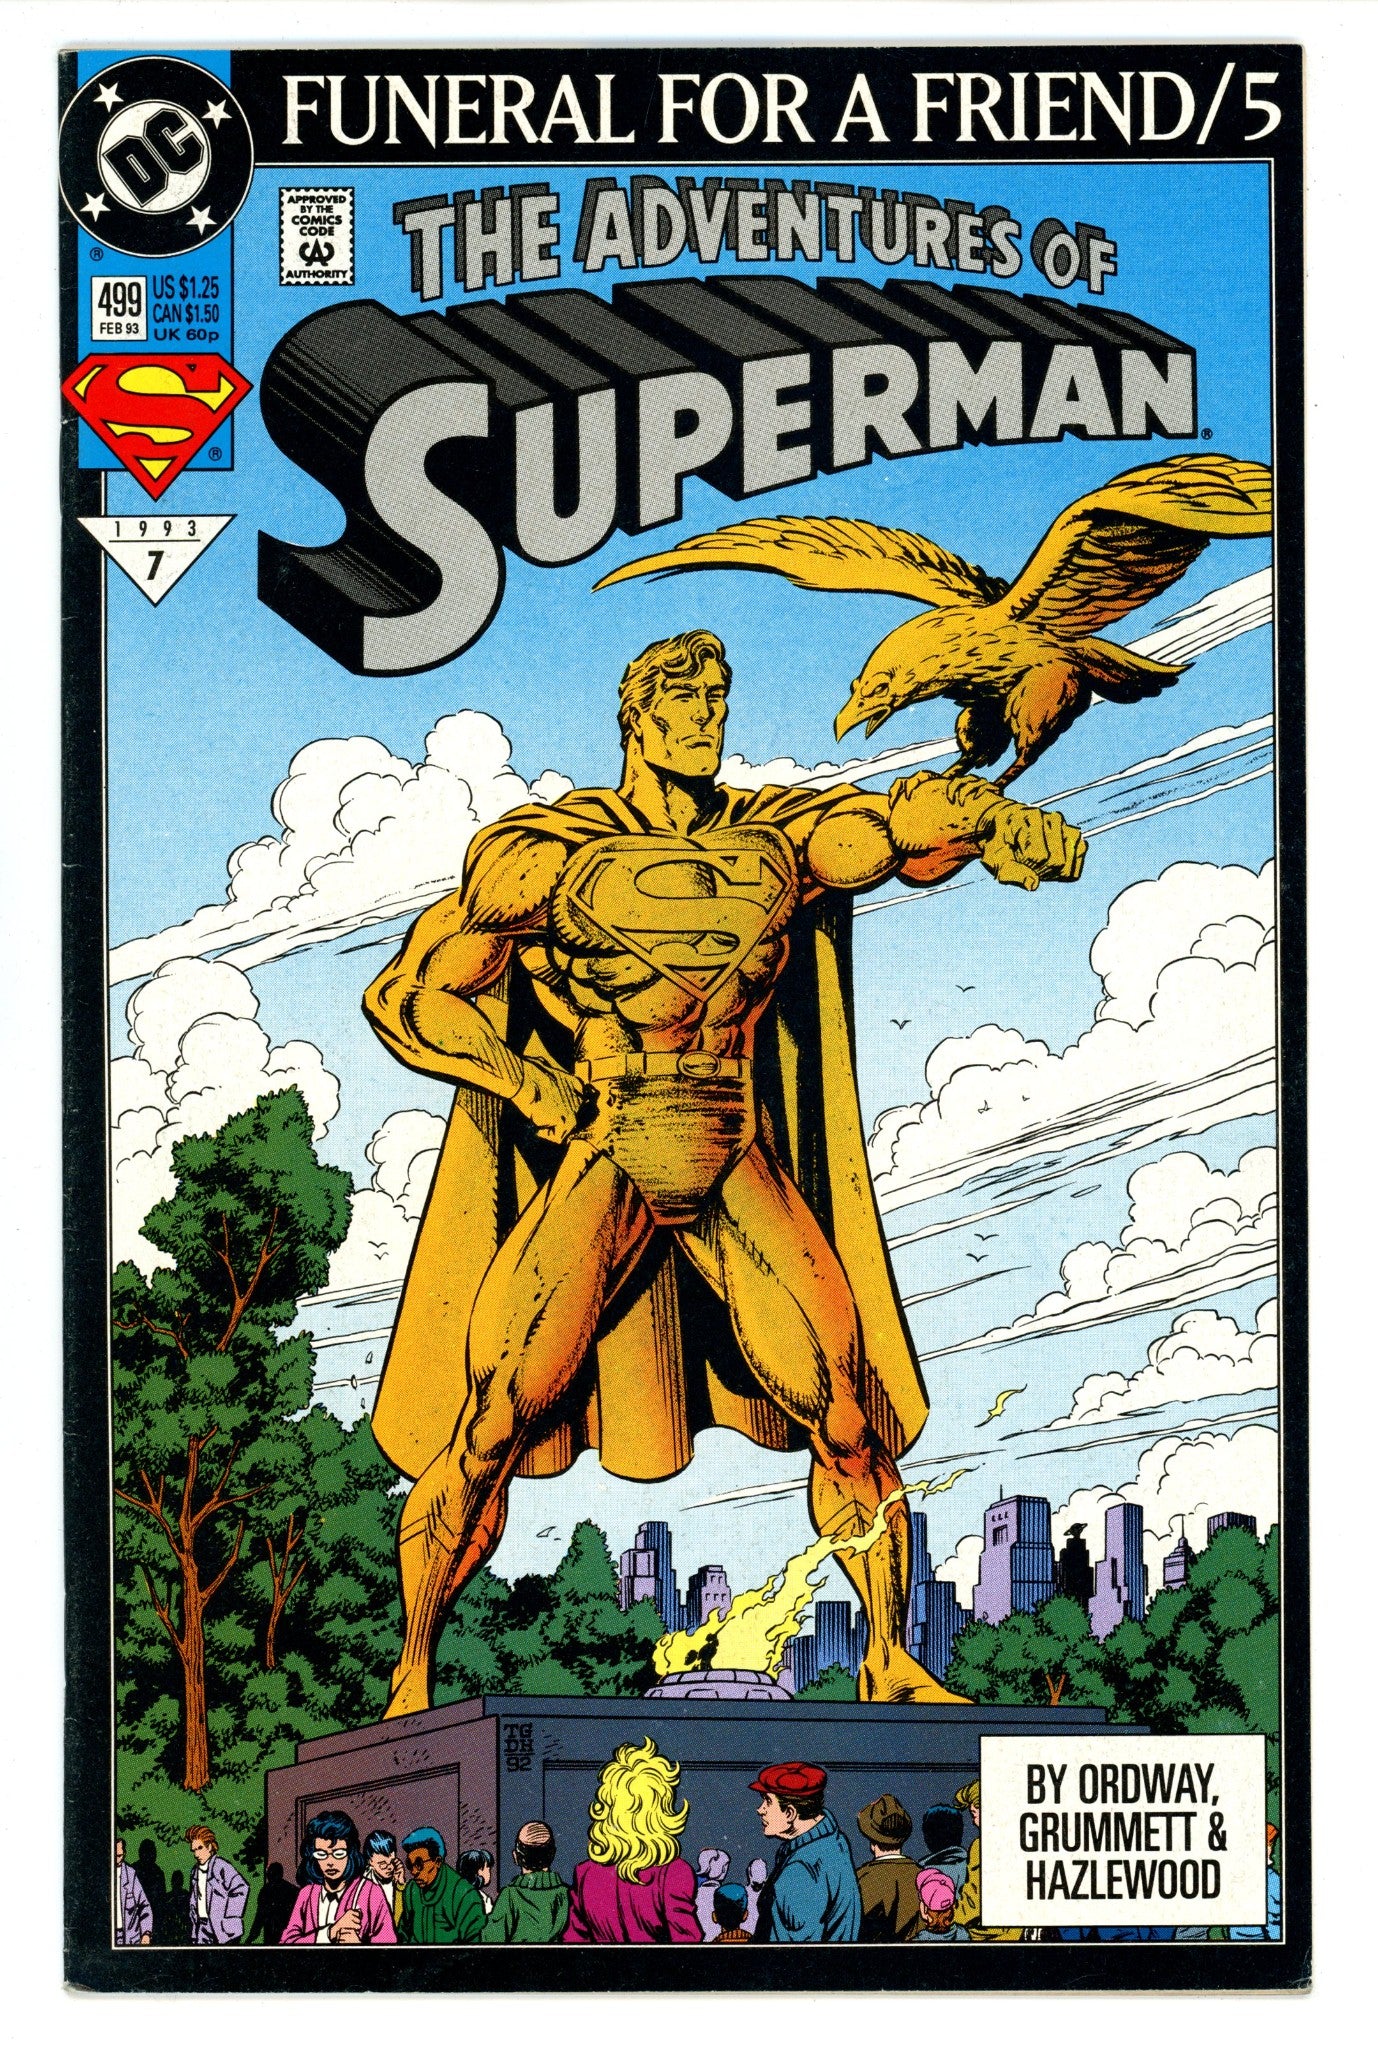 Adventures of Superman Vol 1 499 High Grade (1993) 